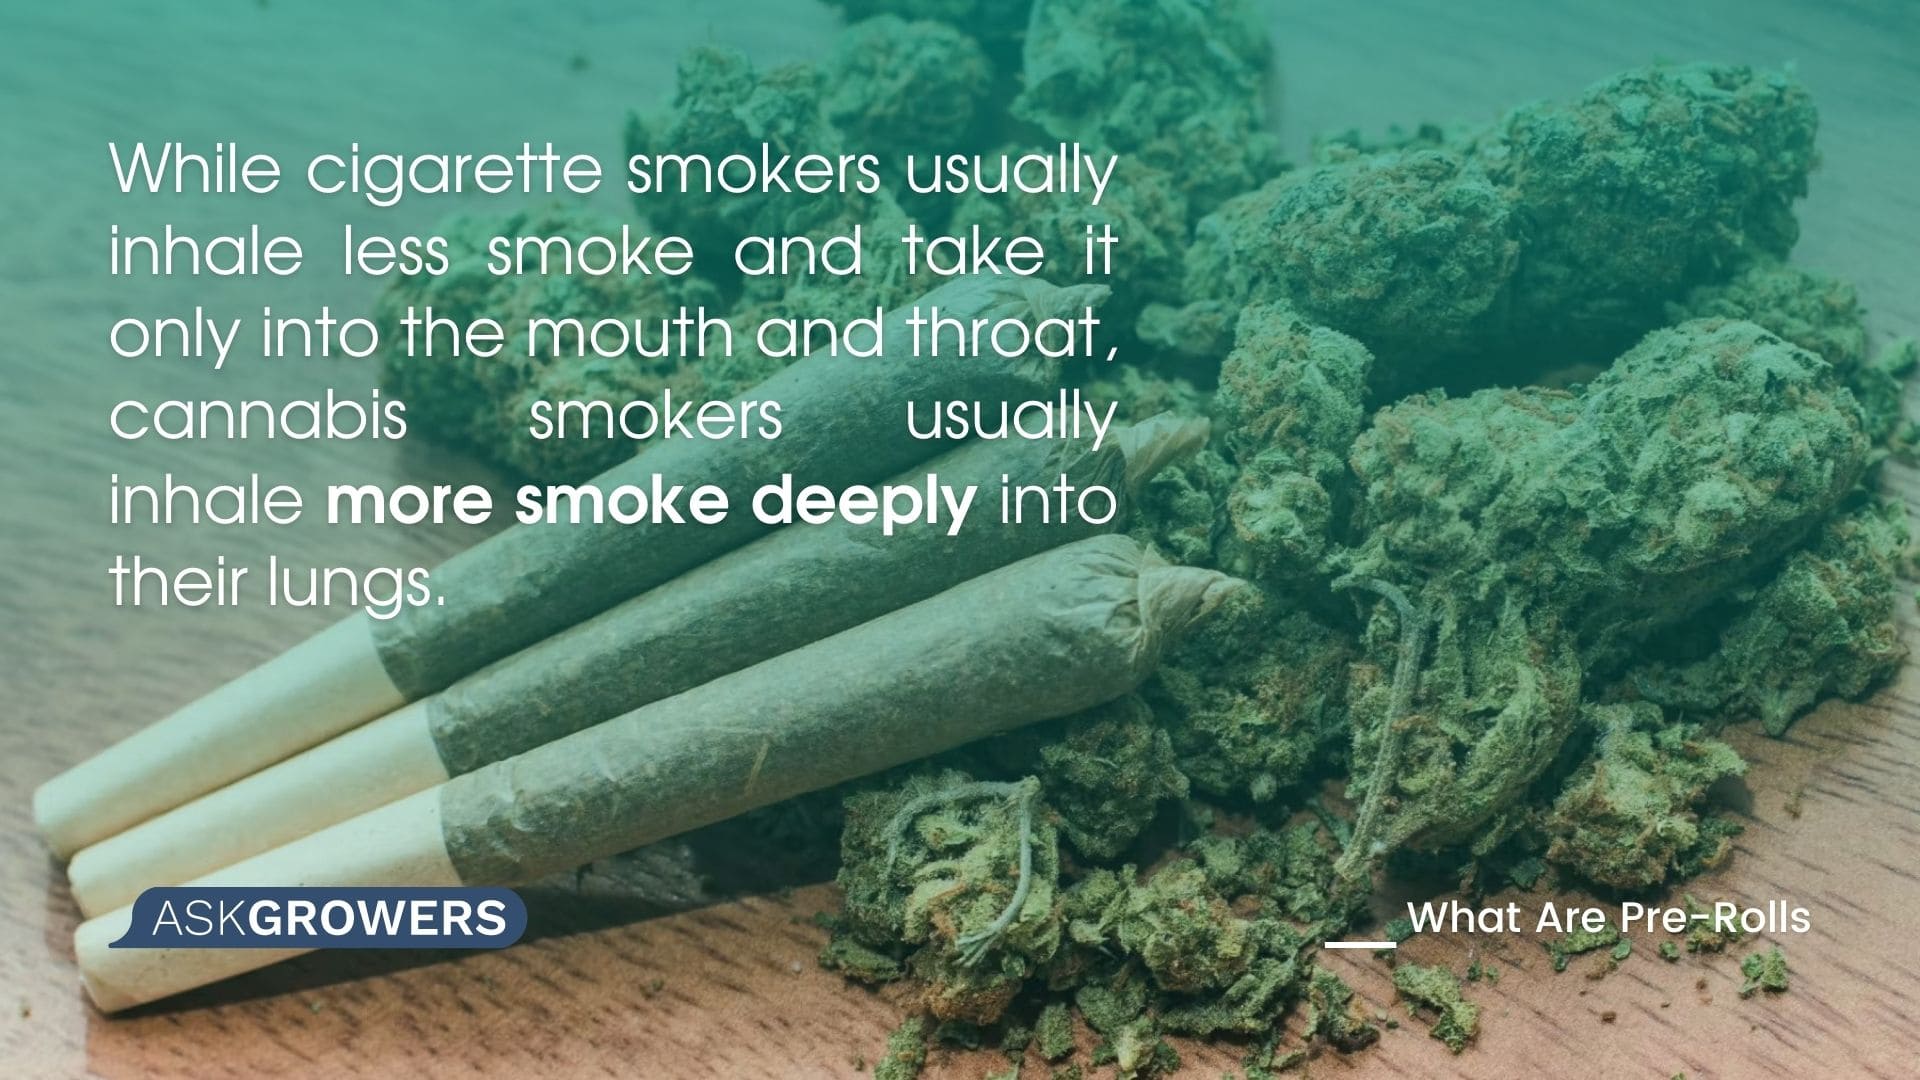 Is Smoking Cannabis Pre-Rolls Dangerous